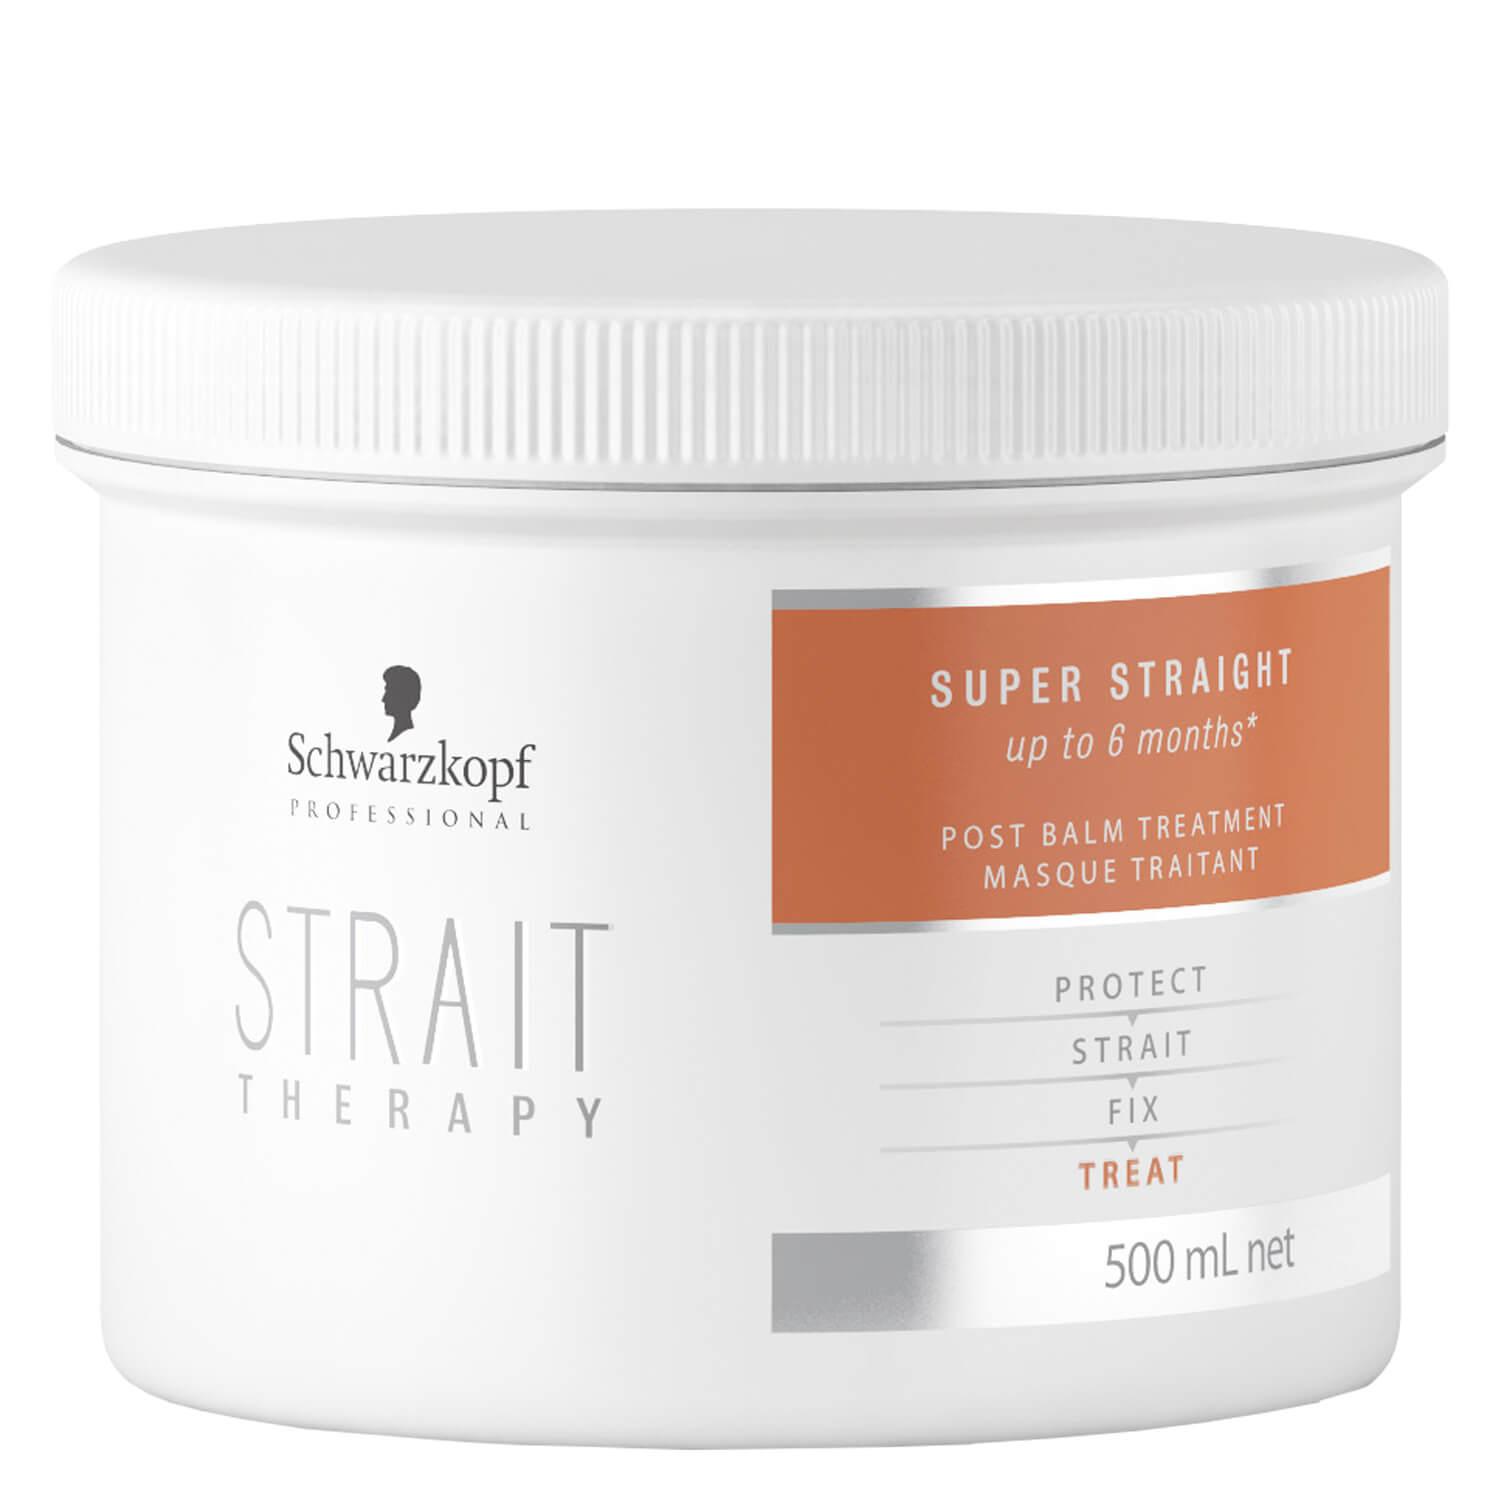 Strait Therapy - Post Balm Treatment